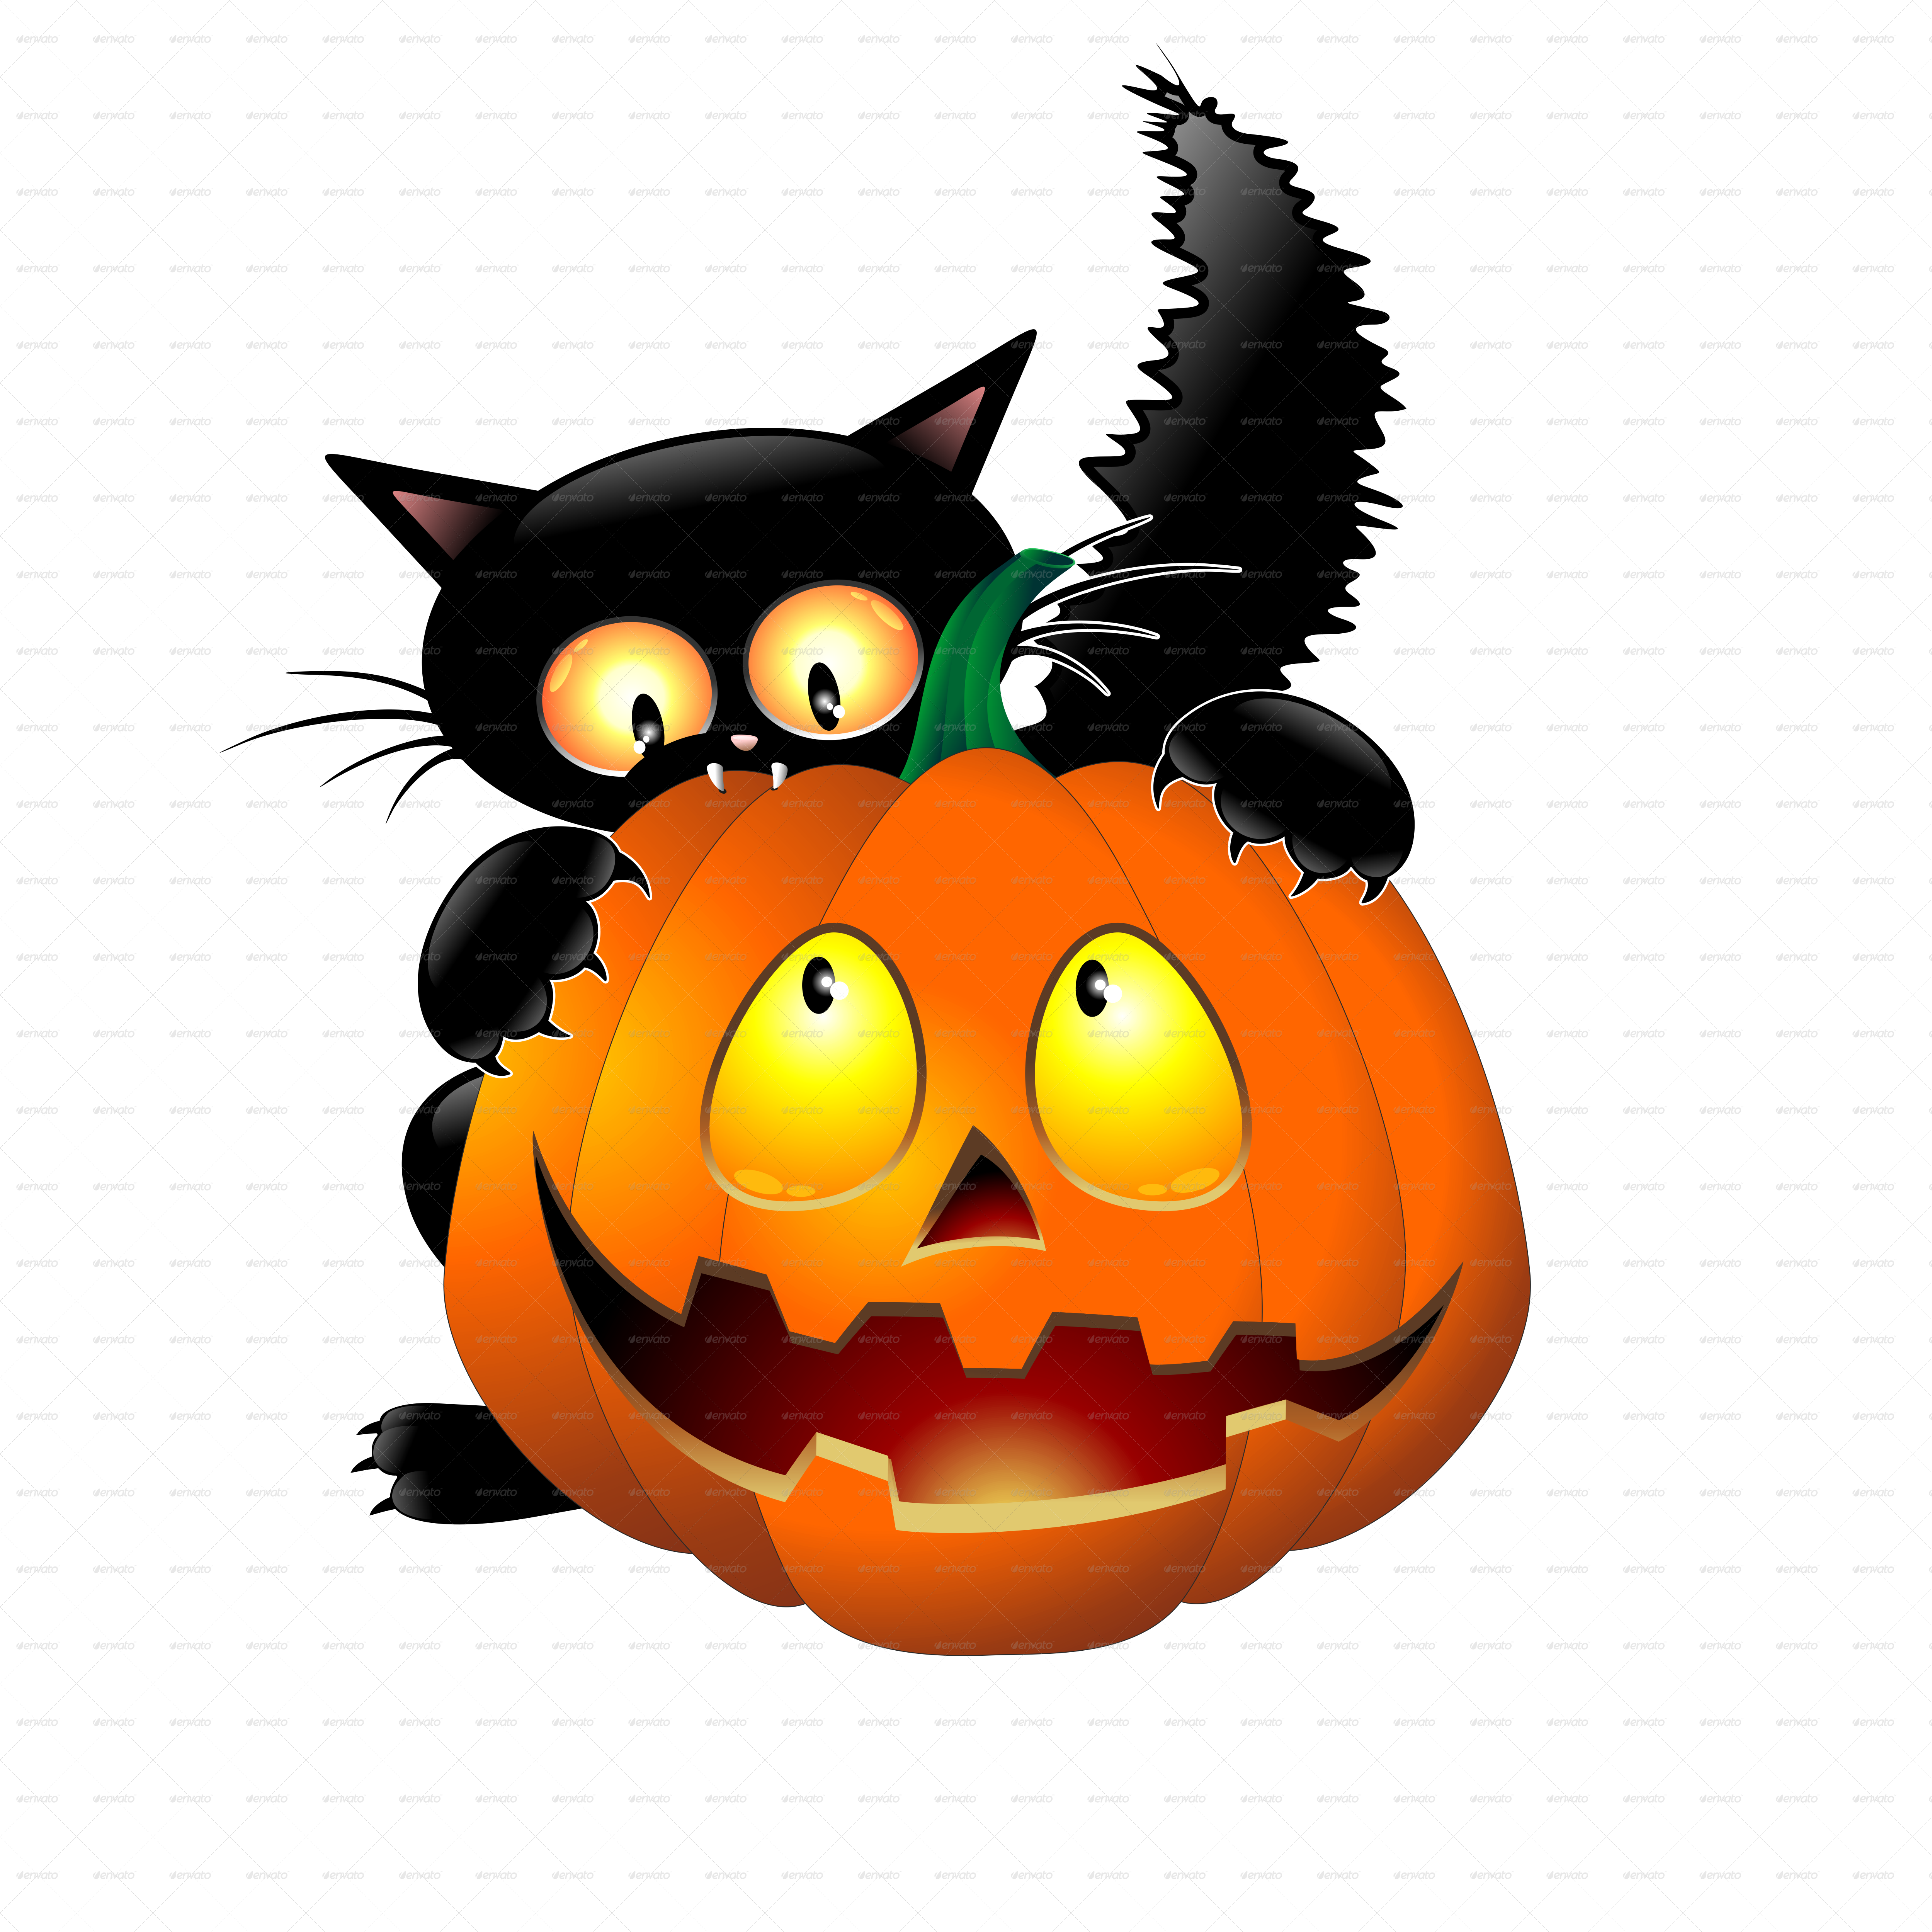 Black Catand Jack O Lantern Halloween PNG image